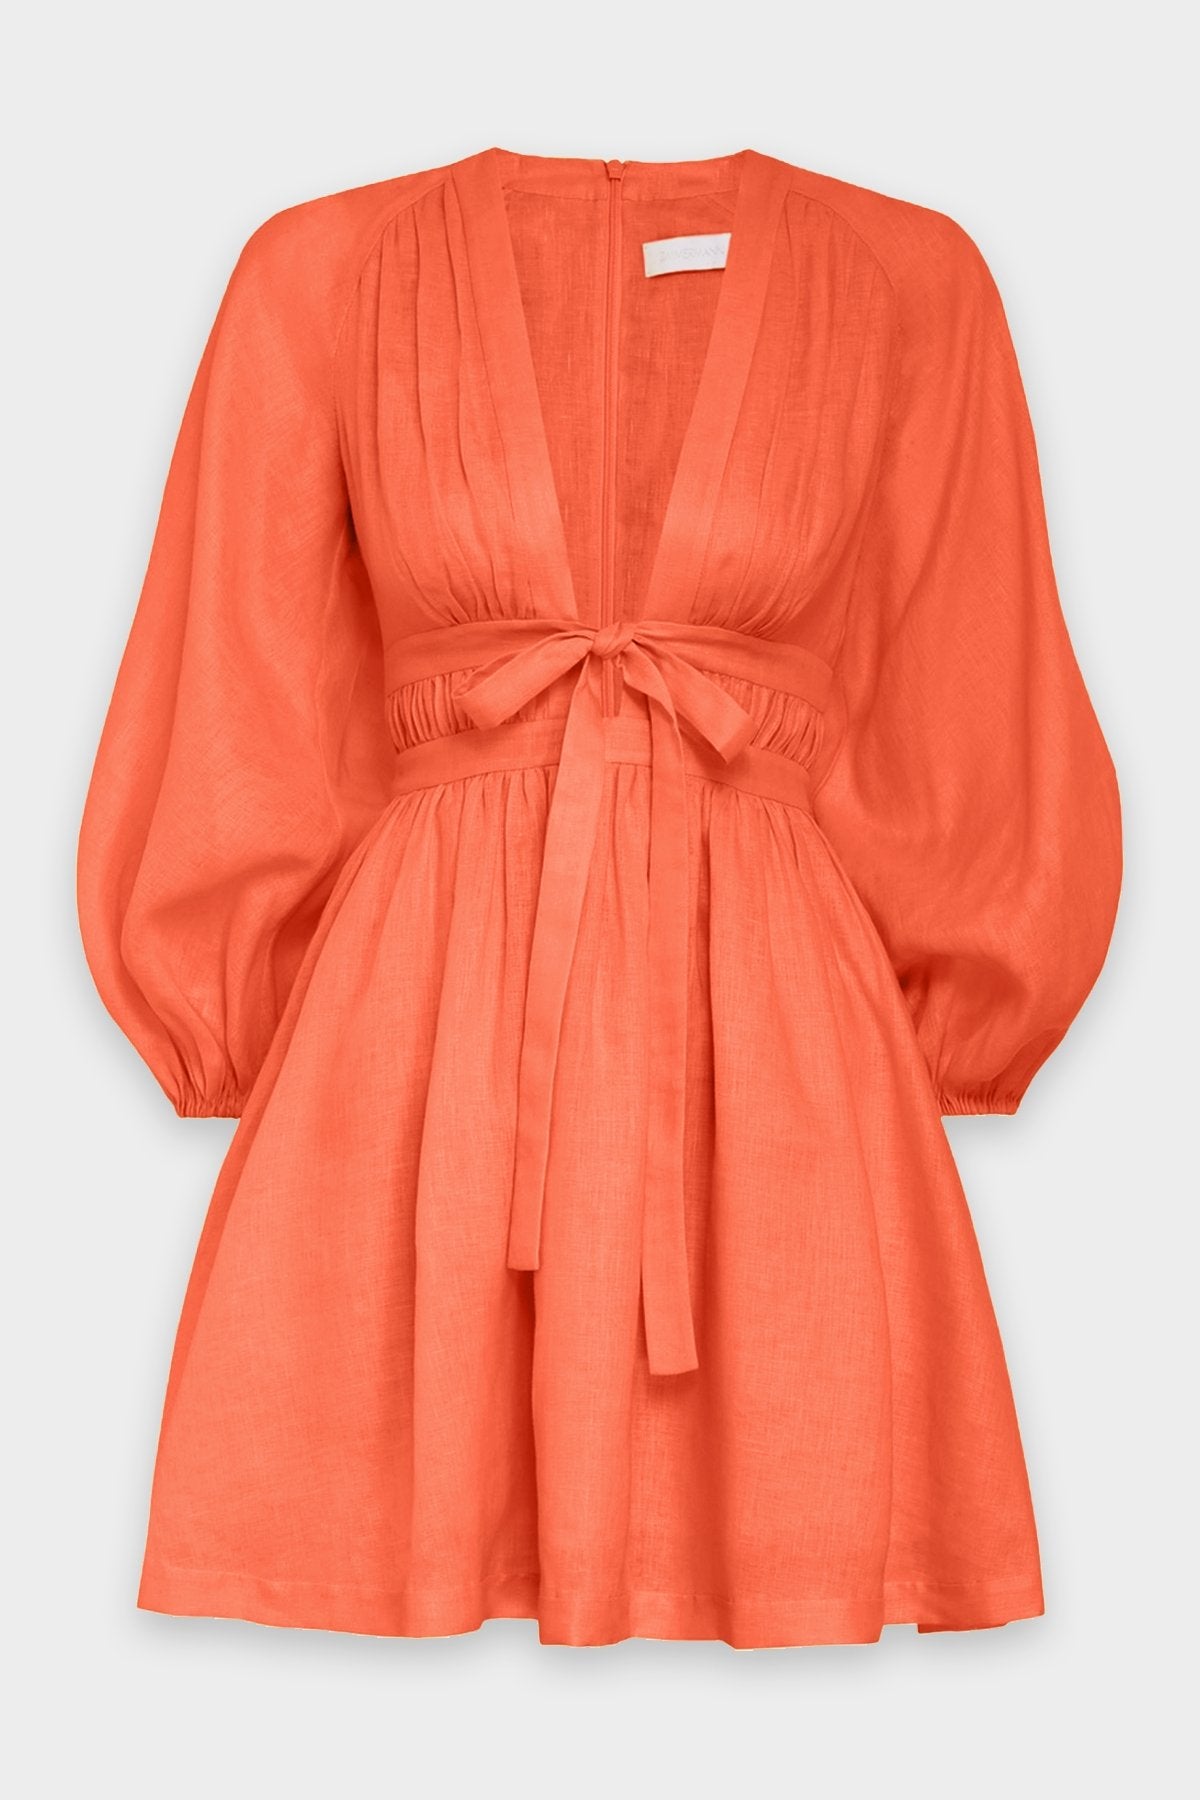 Shelly Plunge Bow Mini Dress in Blood Orange - shop-olivia.com